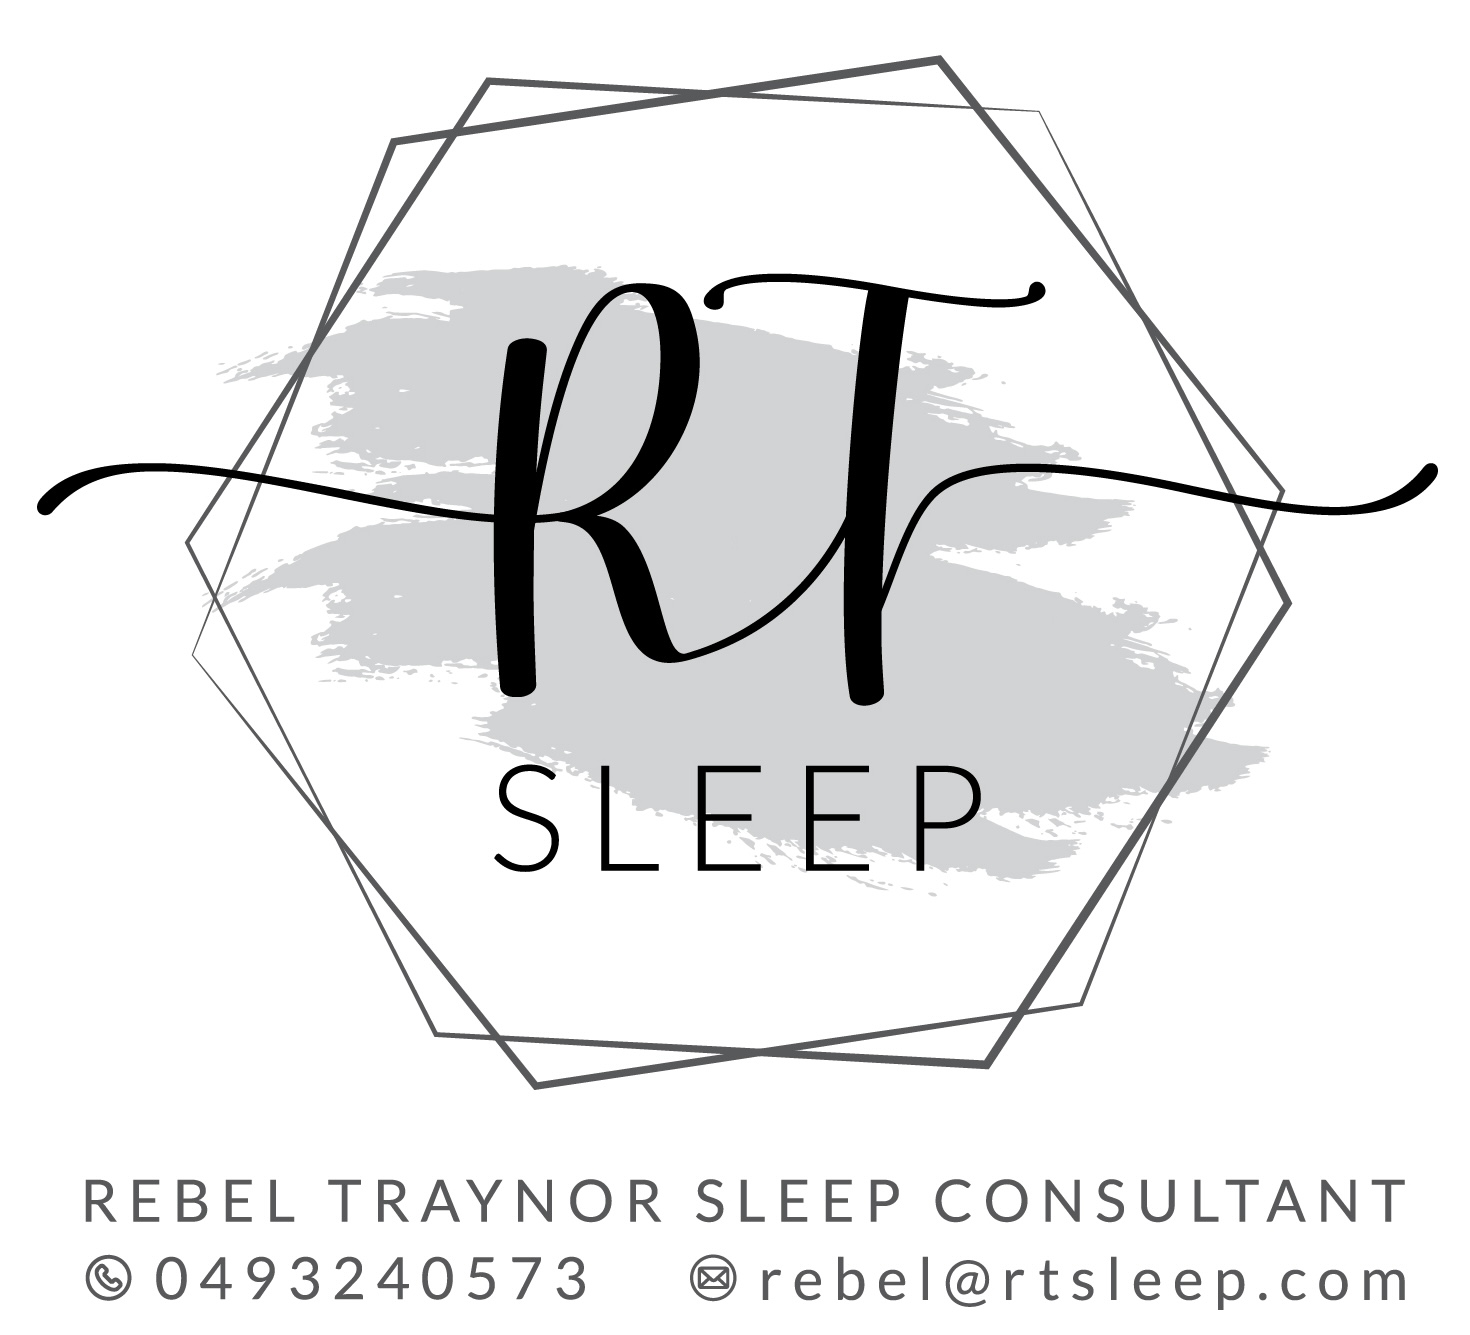 Rebel Traynor Sleep Consultant